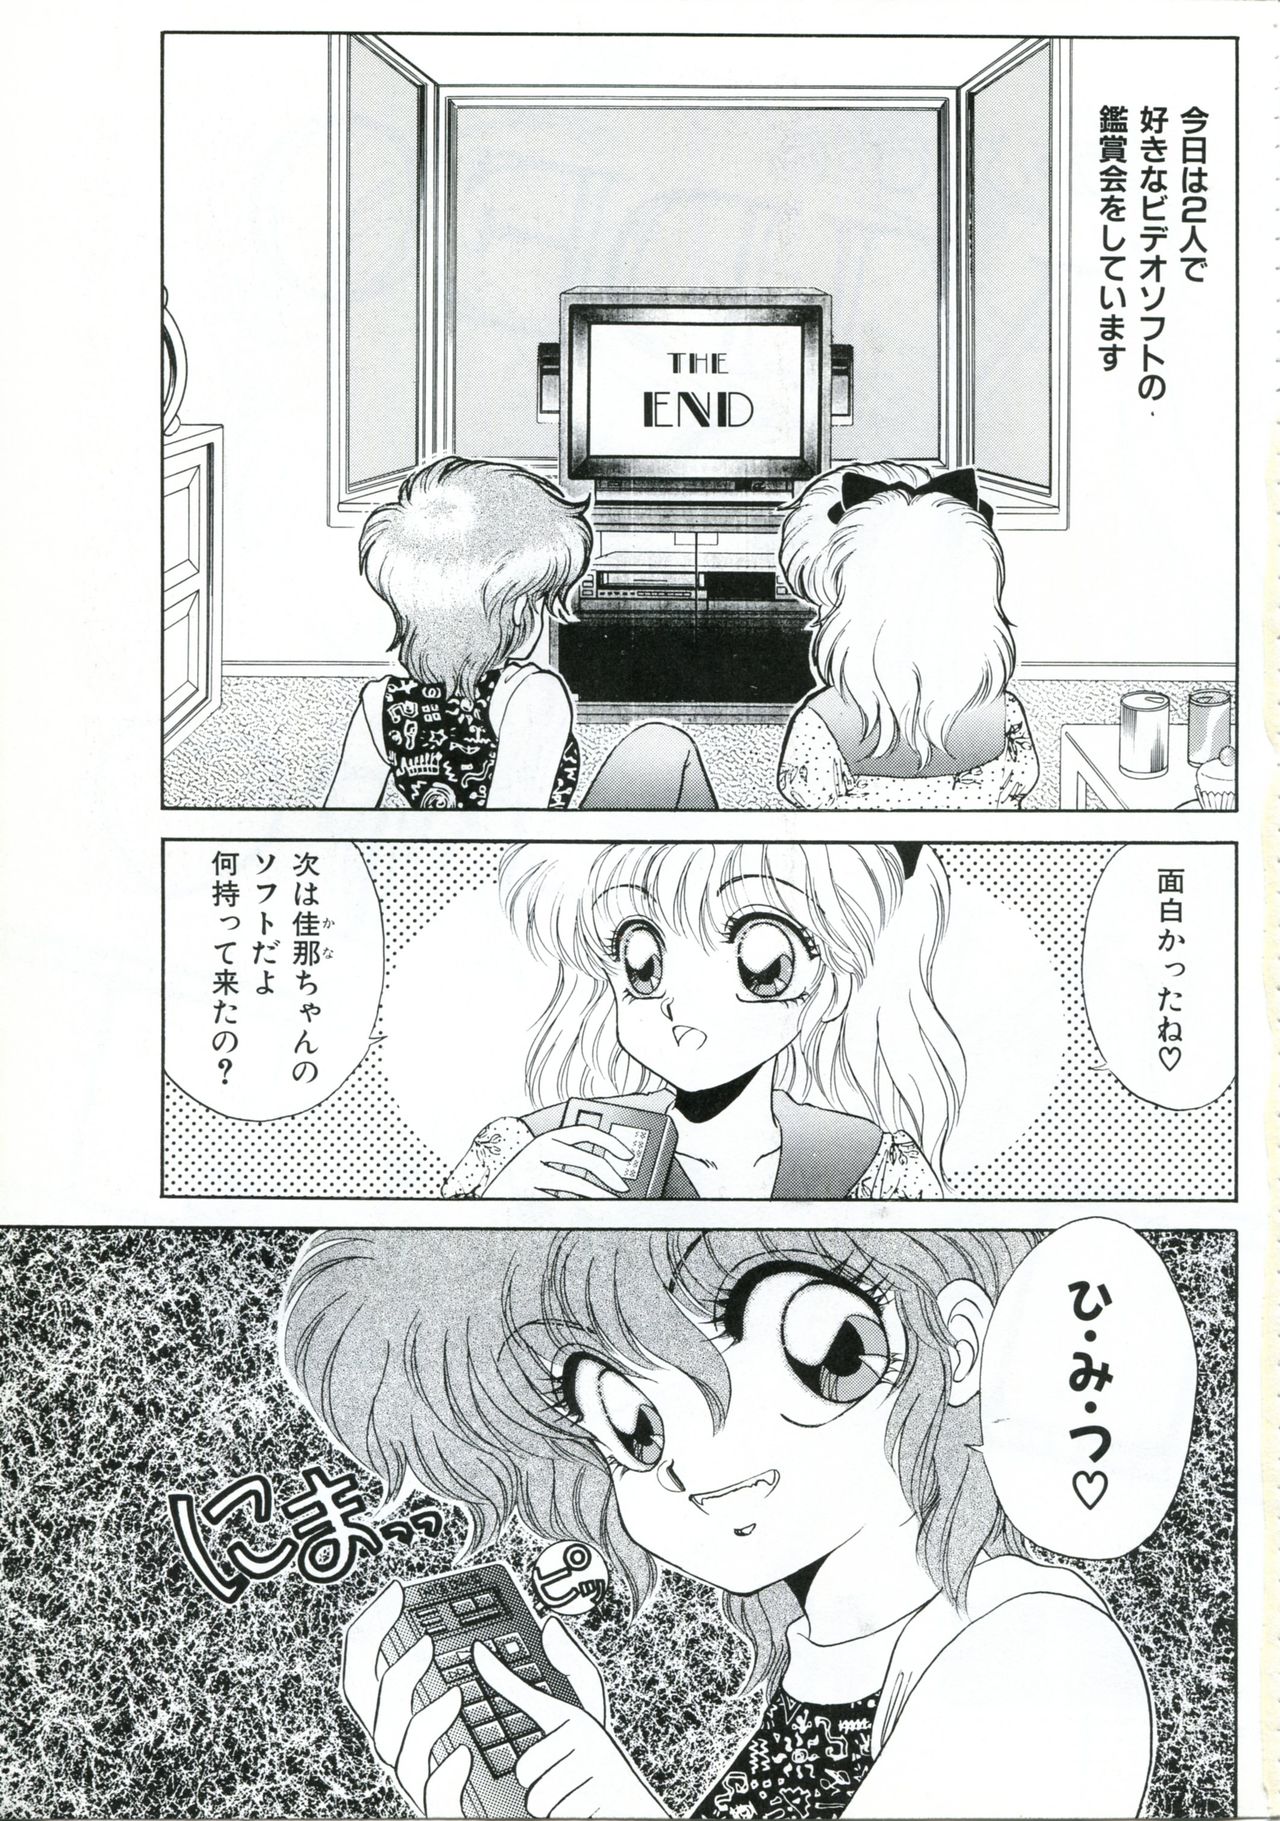 Bishoujo Anime Daizenshuu - Adult Animation Video Catalog 1991 美少女アニメ大全集 - アダルトアニメビデオカタログ1991